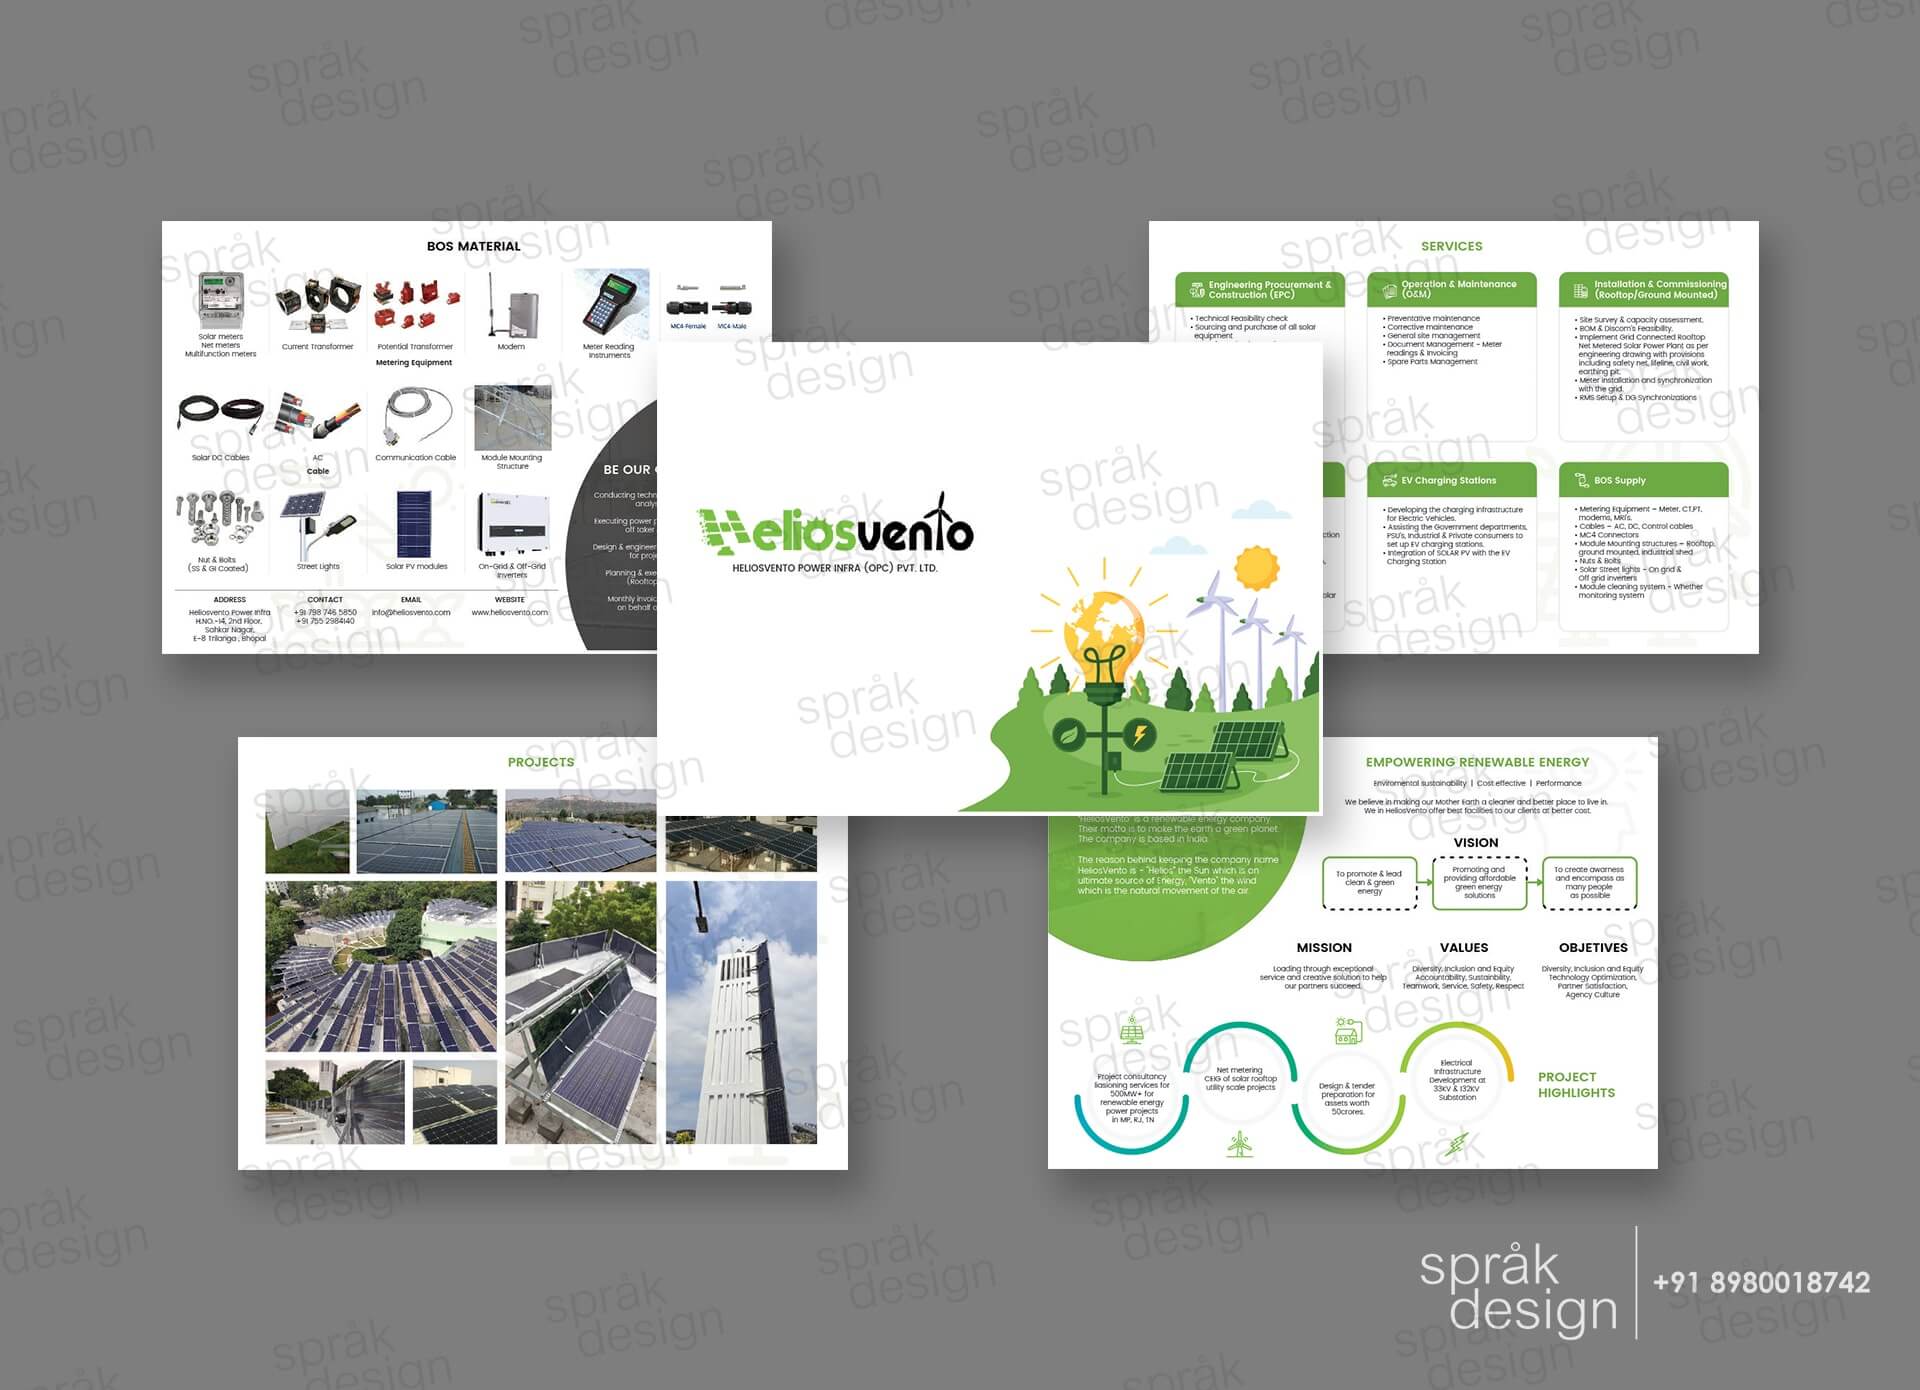 Heliosvento Company Presentation Design